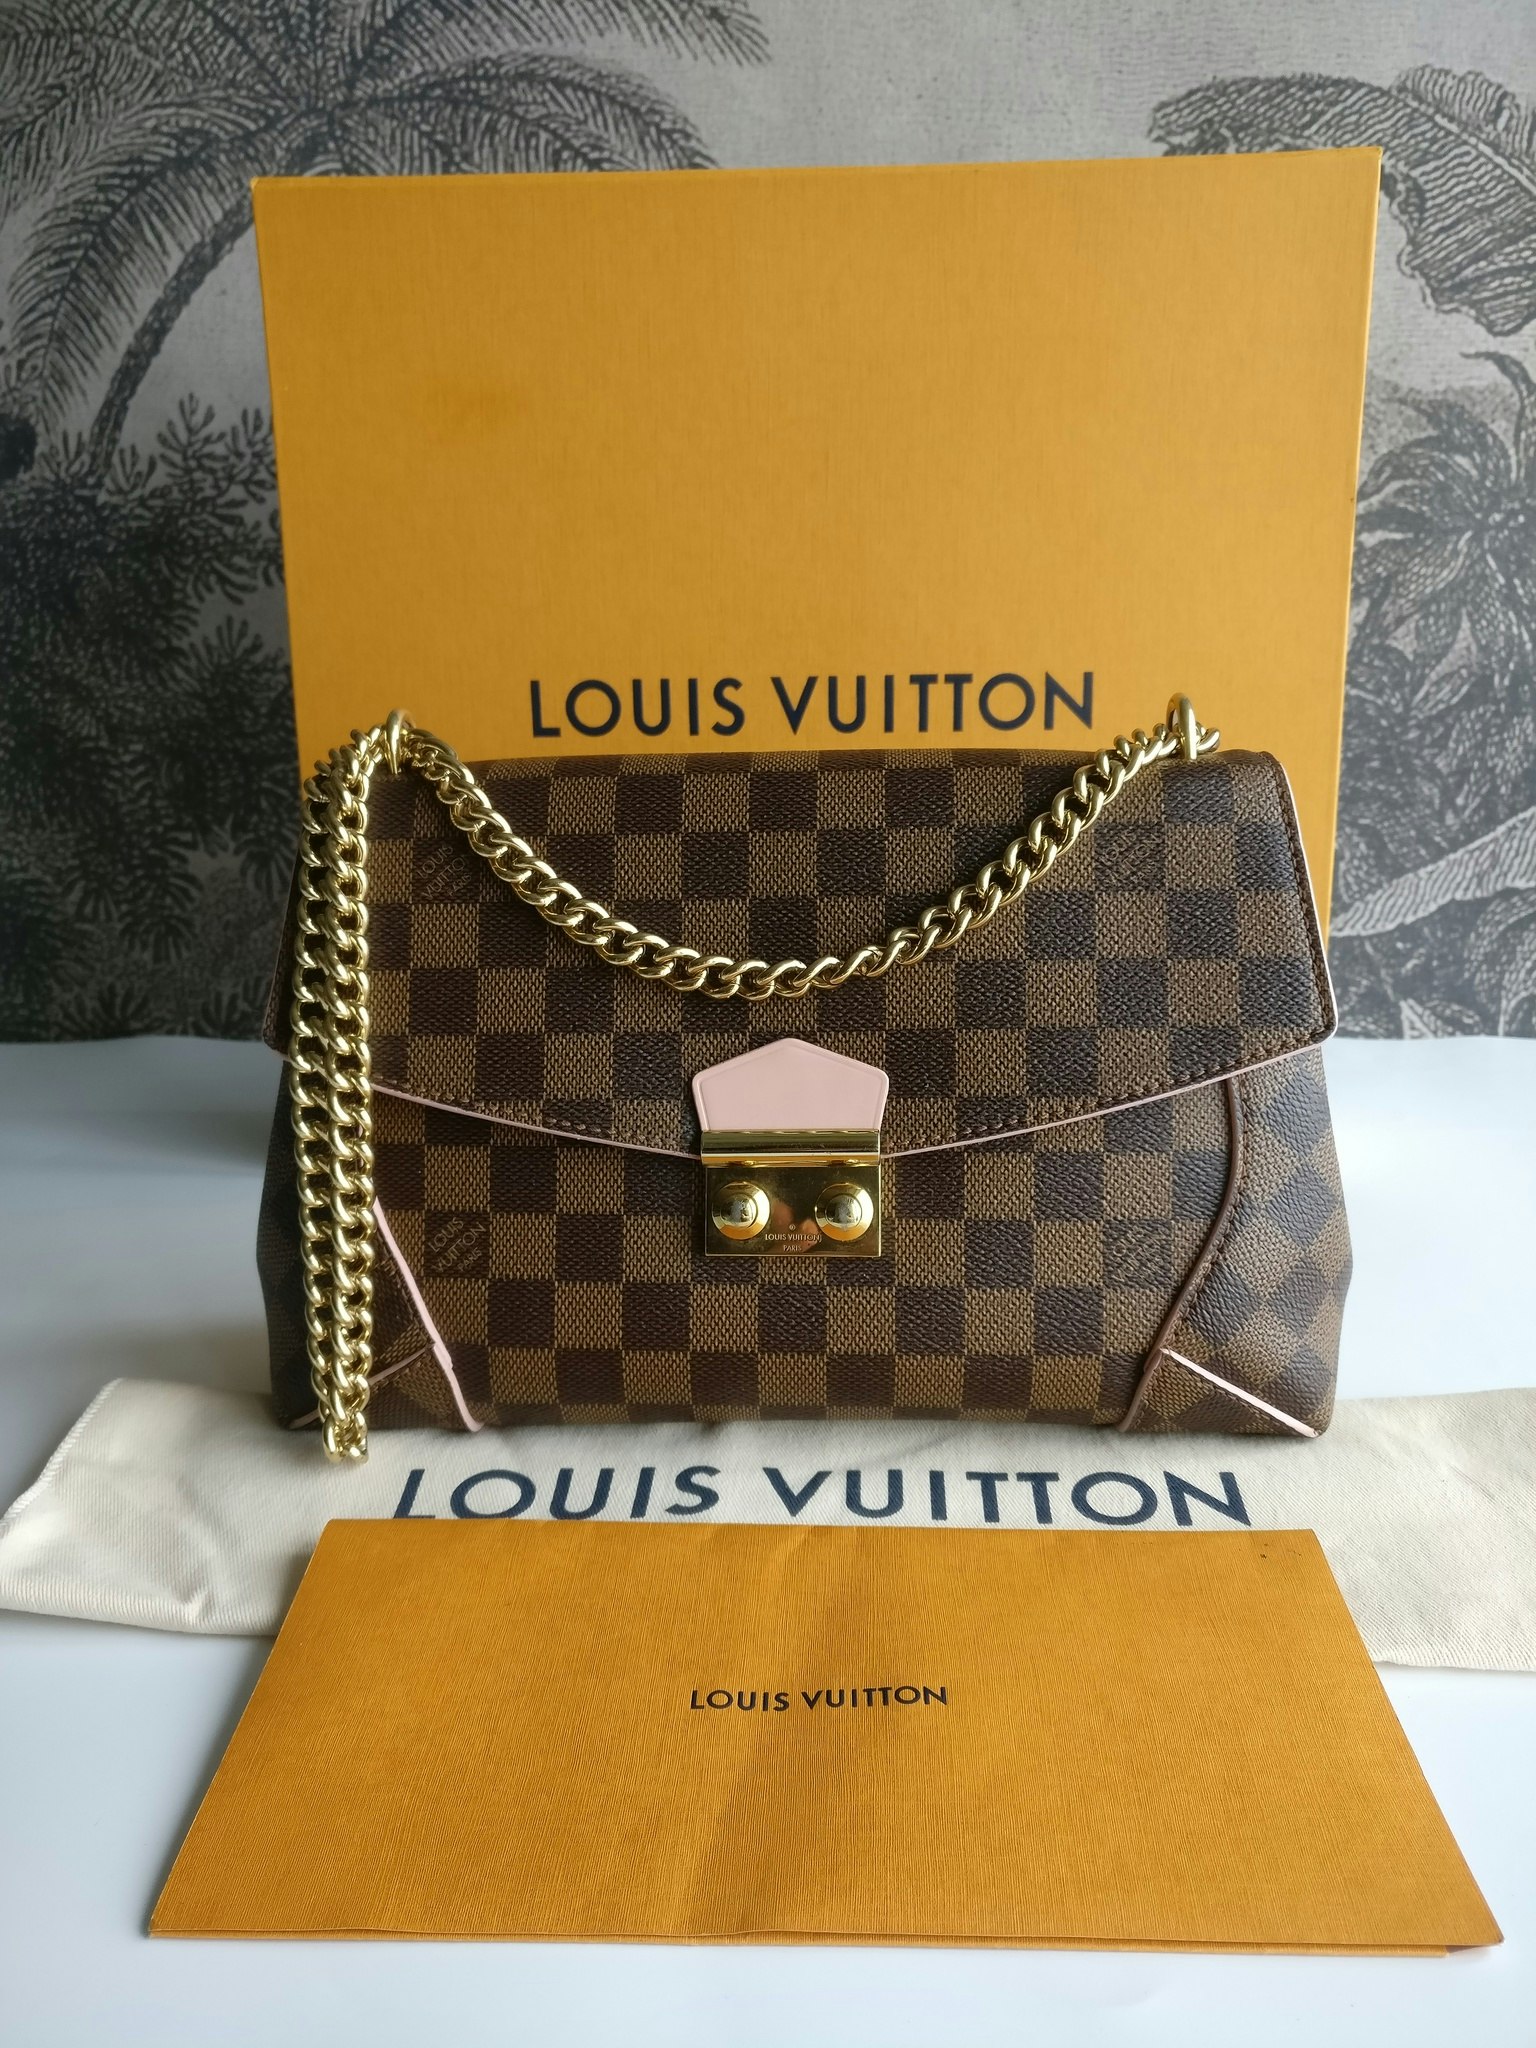 Louis Vuitton Caissa Clutch damier ebene - Good or Bag